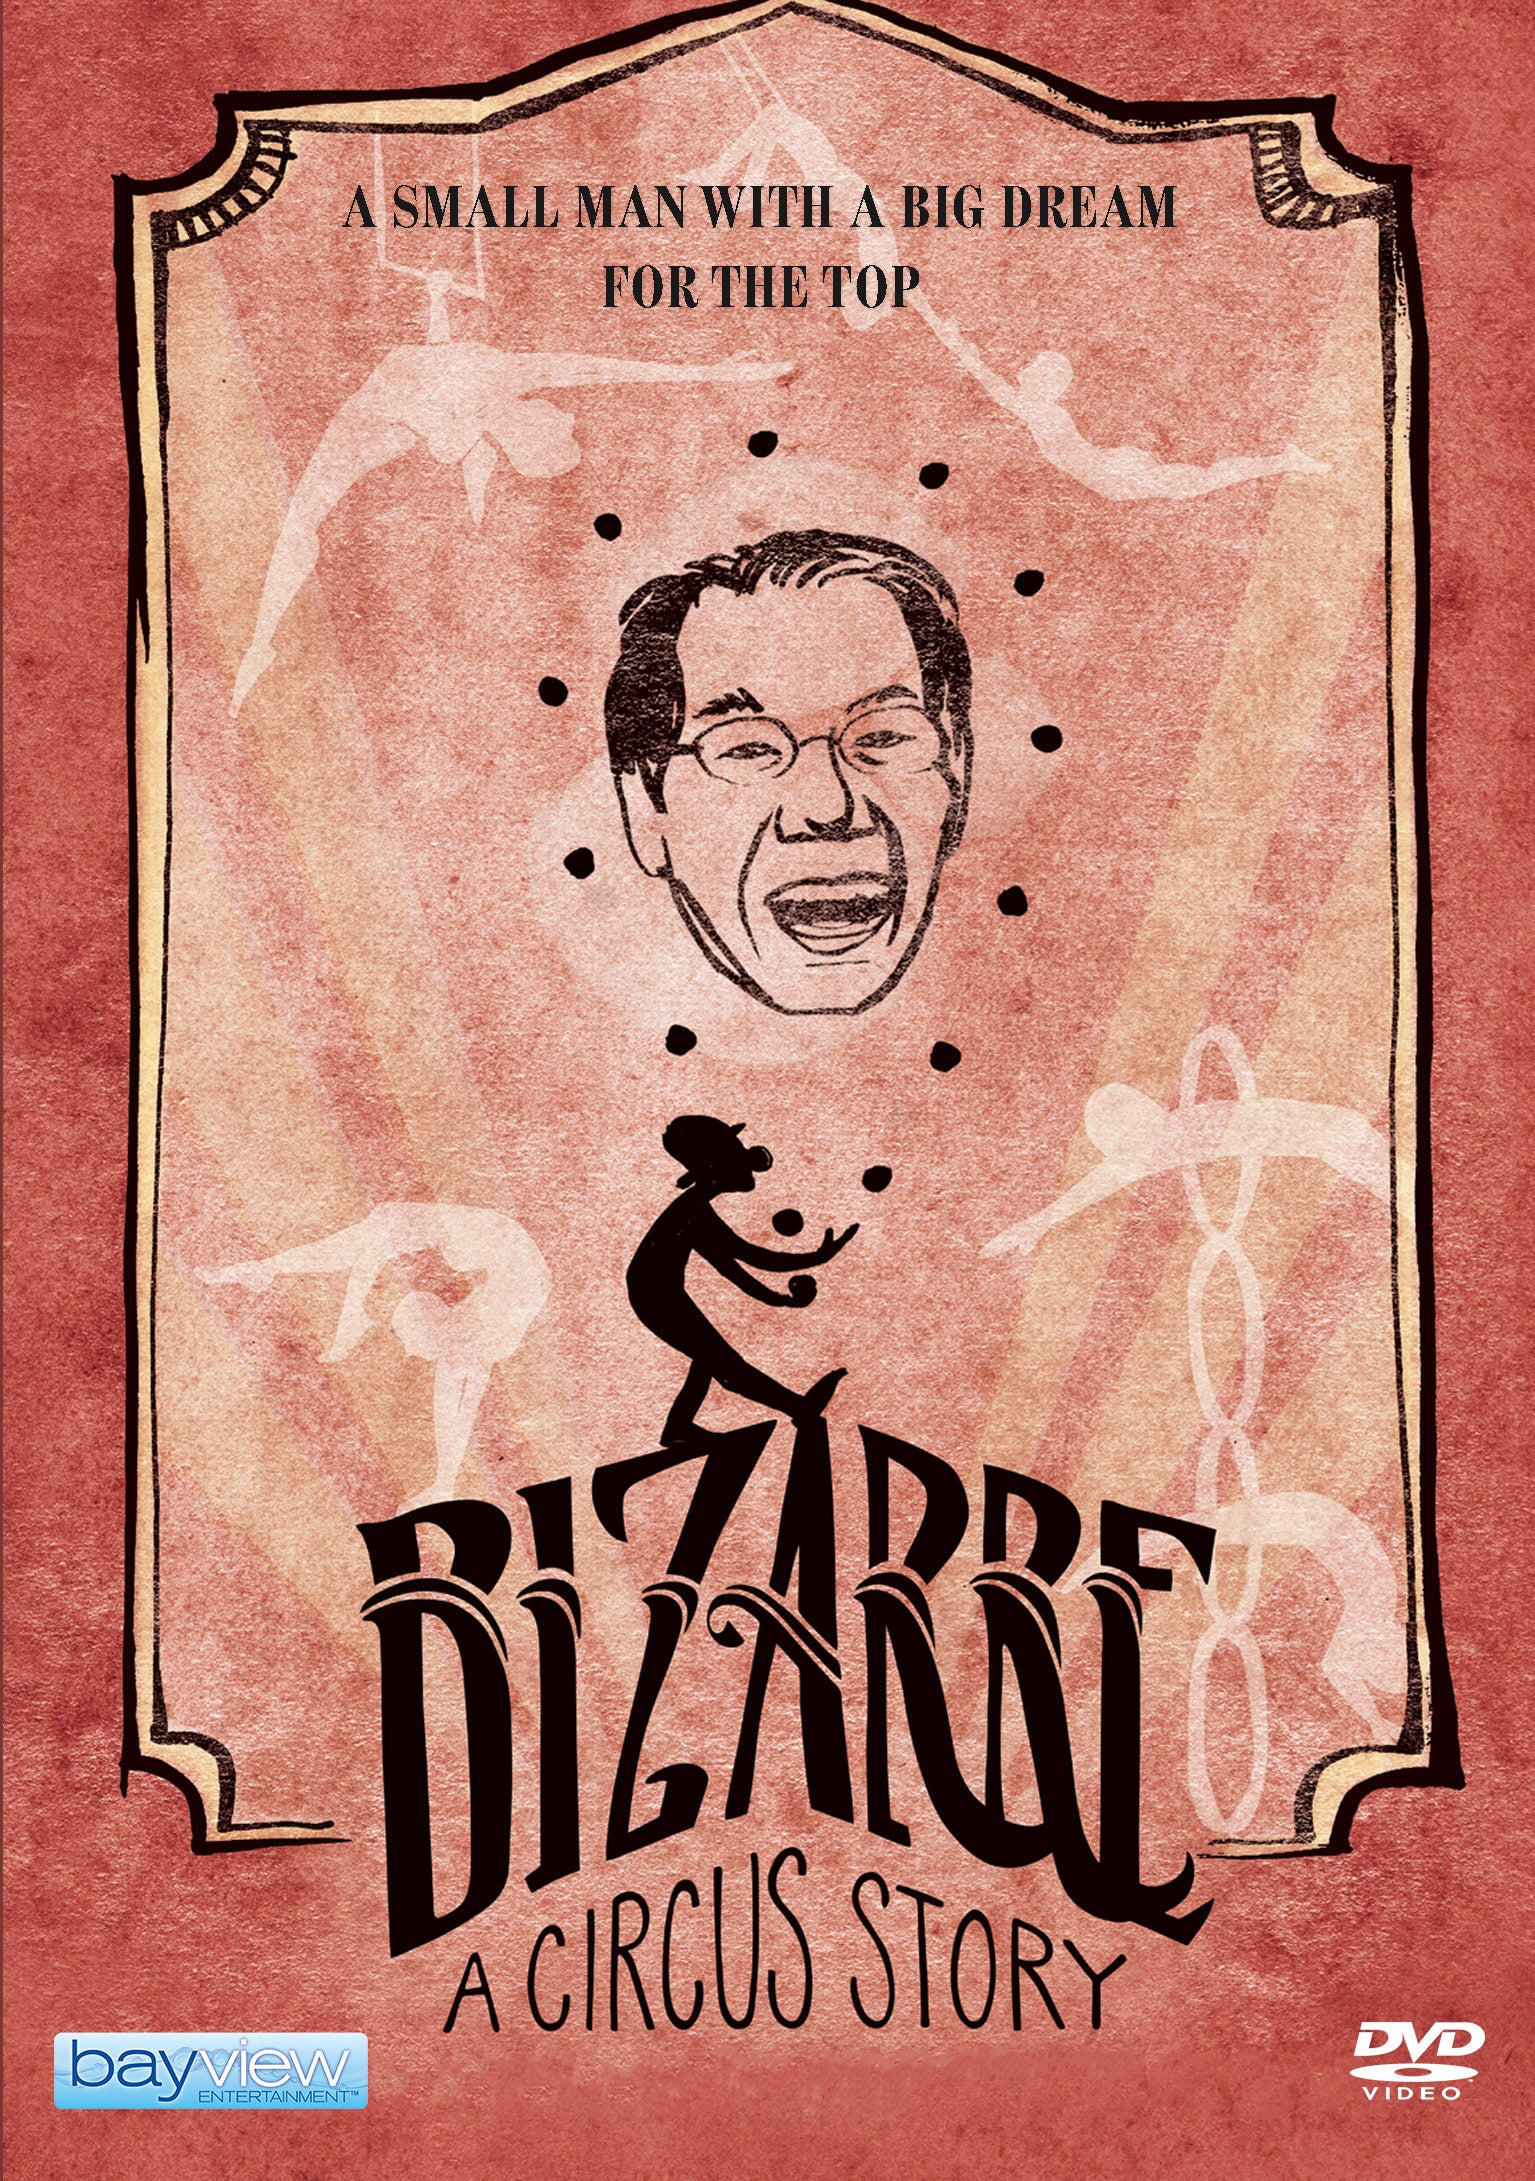 Bizarre: A Circus Story cover art